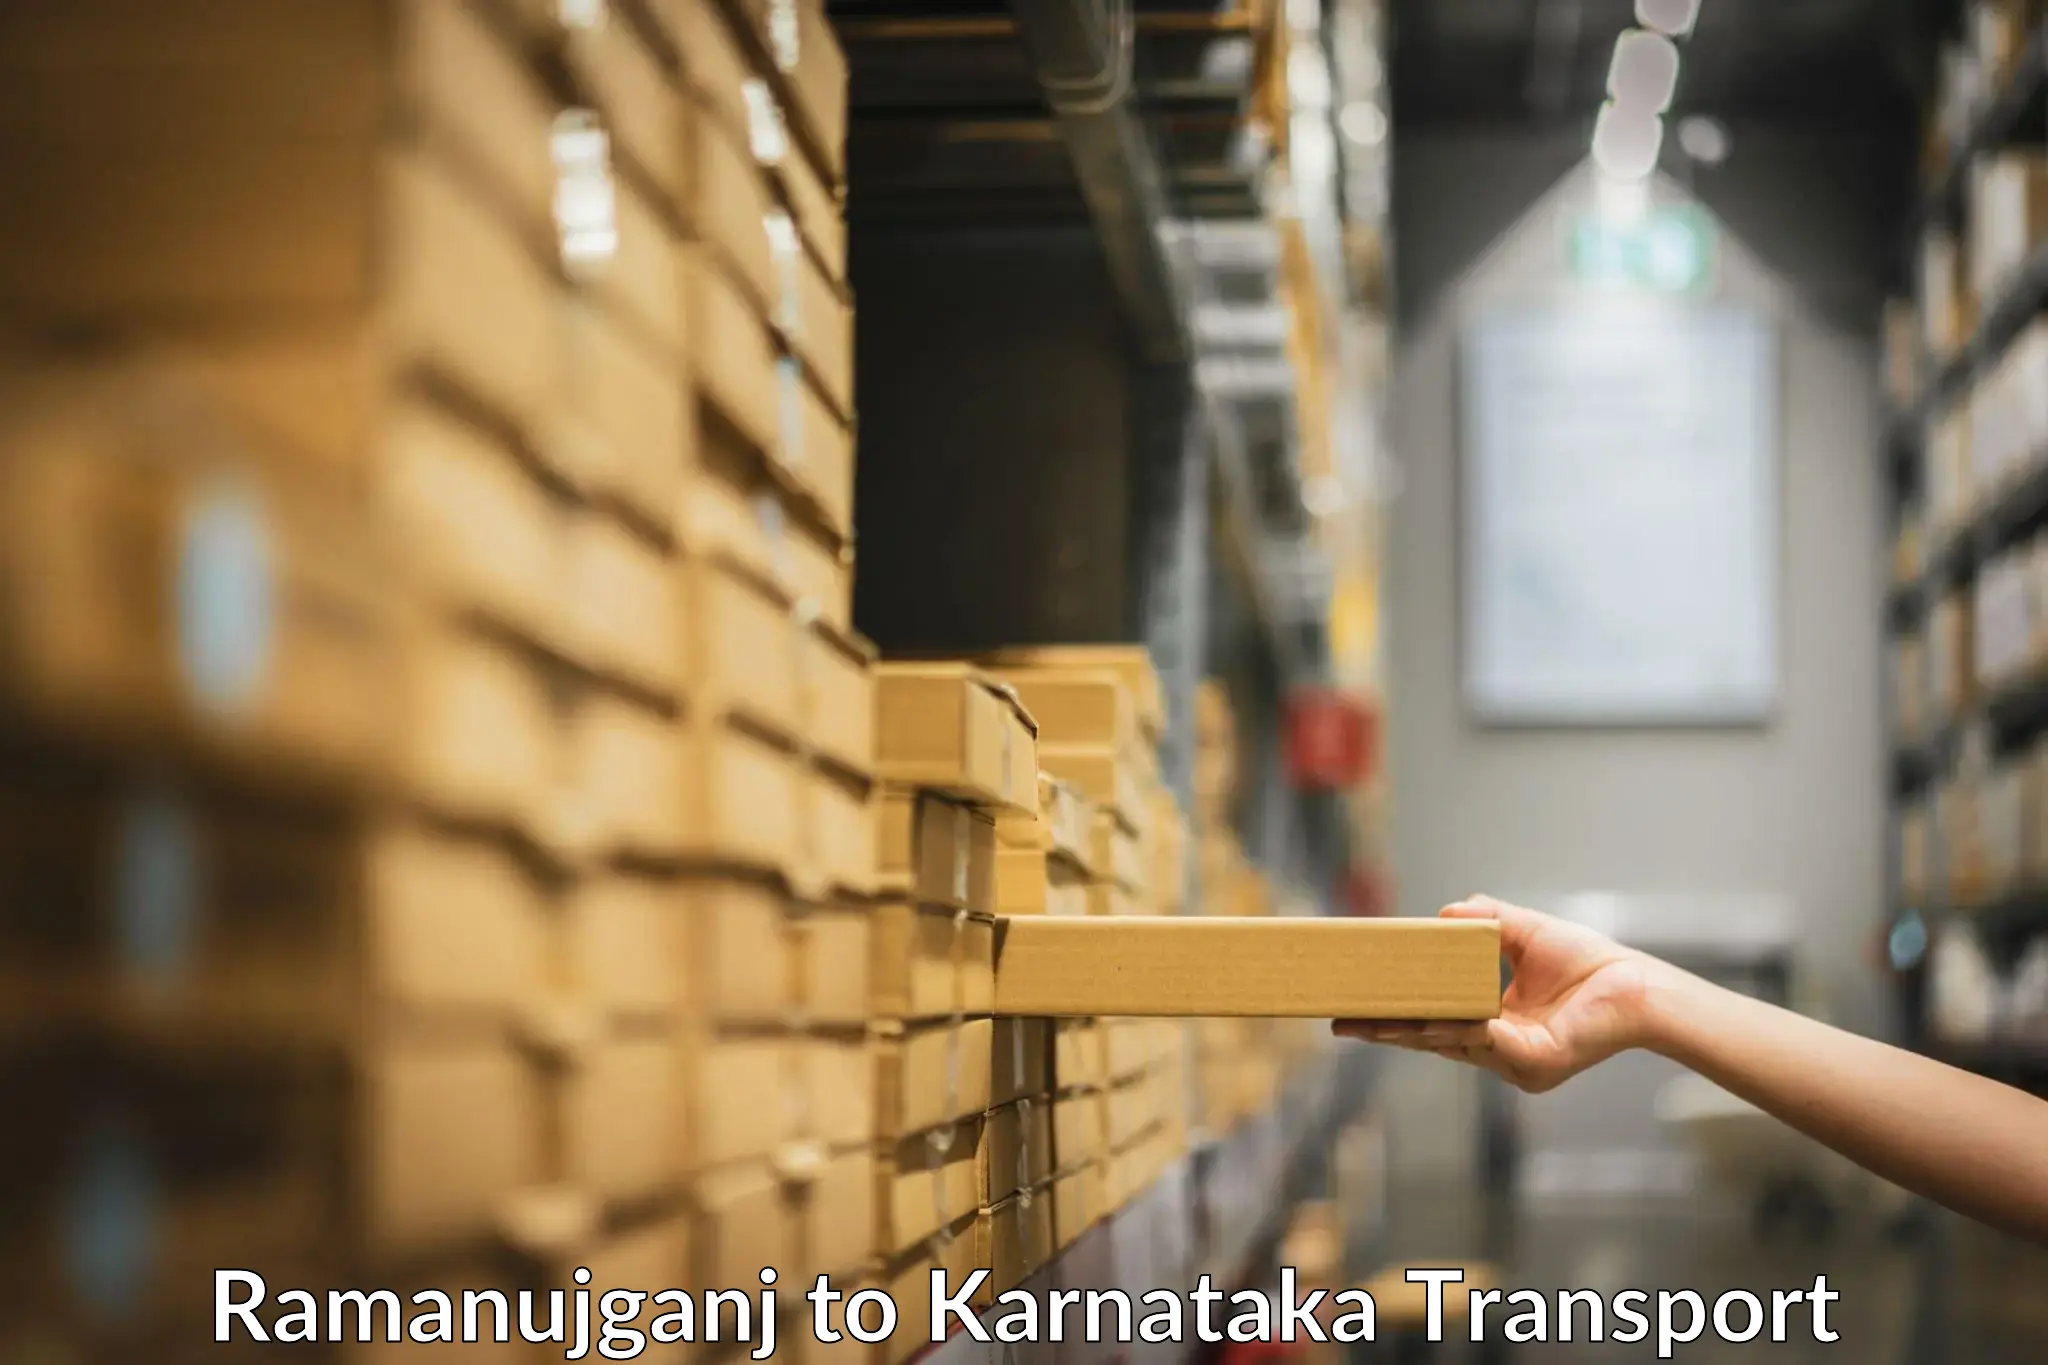 Transport bike from one state to another Ramanujganj to Karnataka